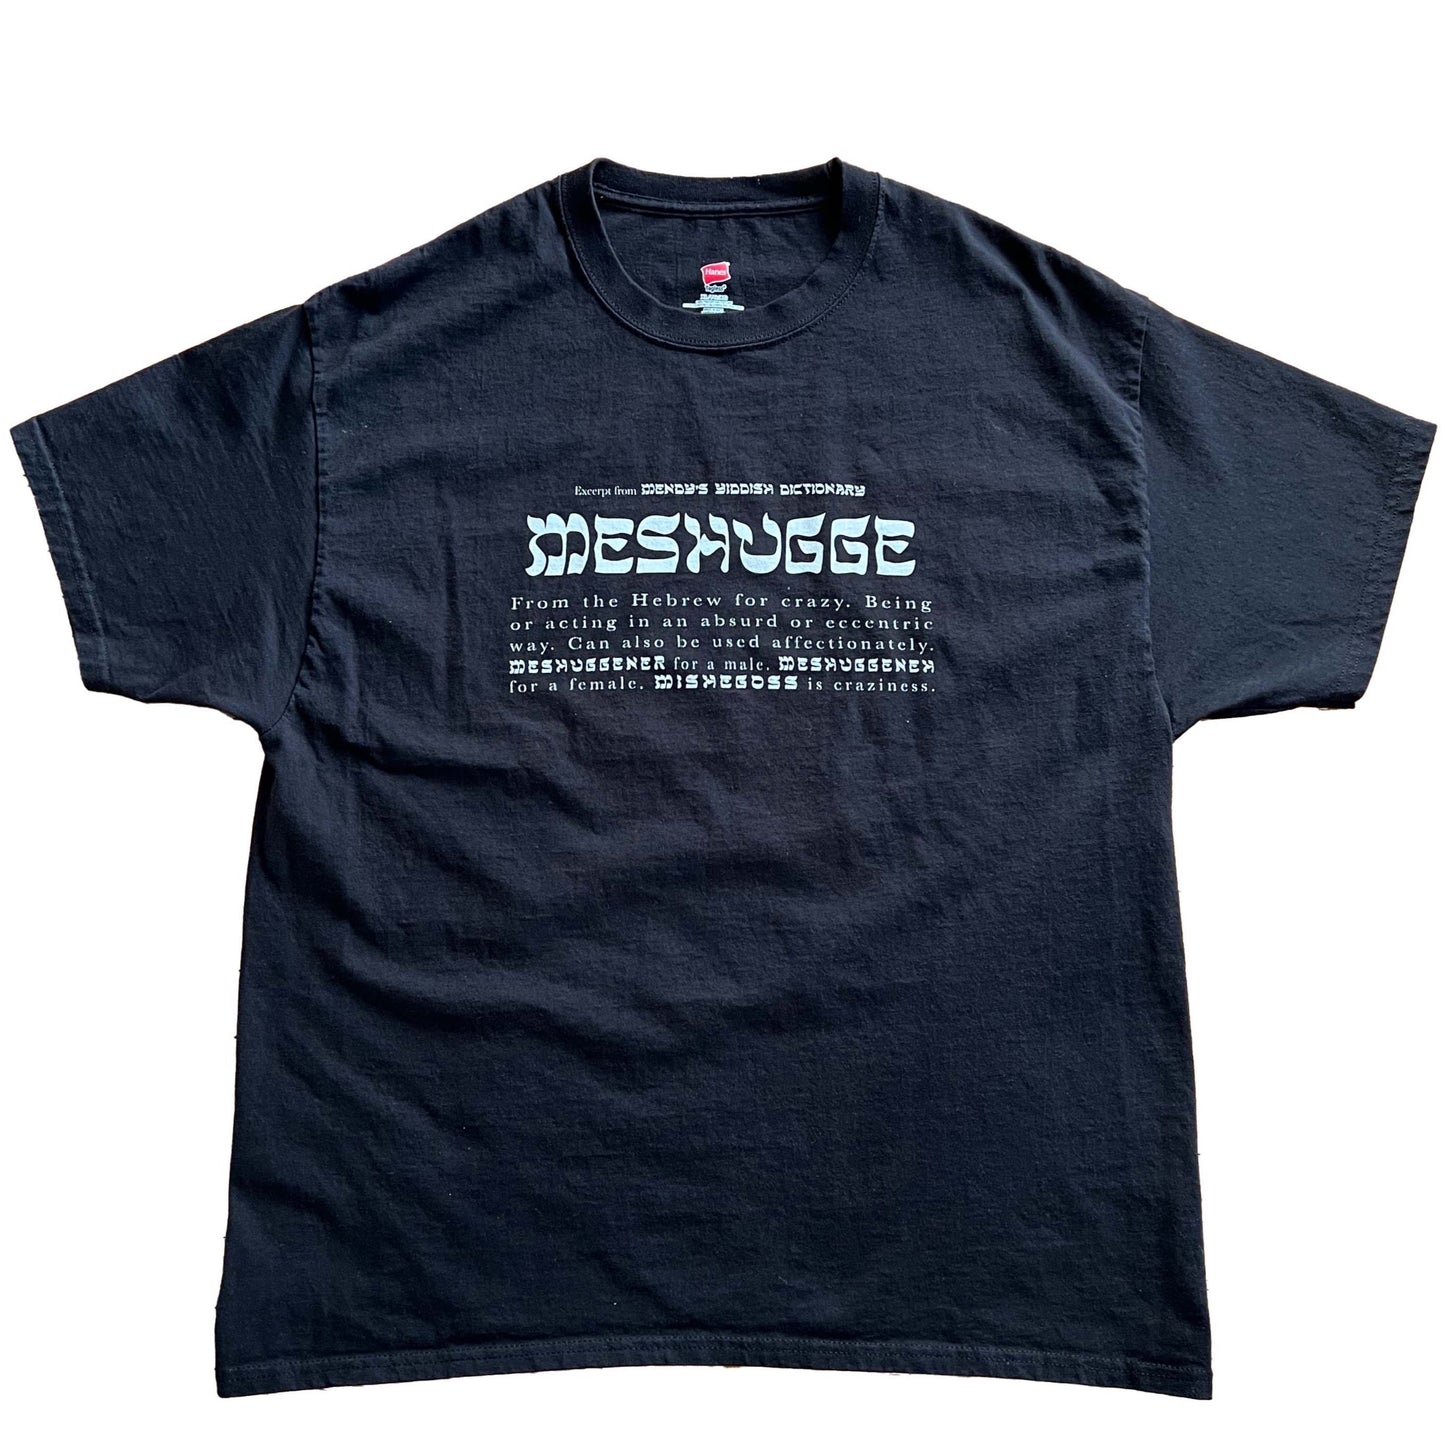 The Original T-Shirt - T-Shirts - Black - Meshugge